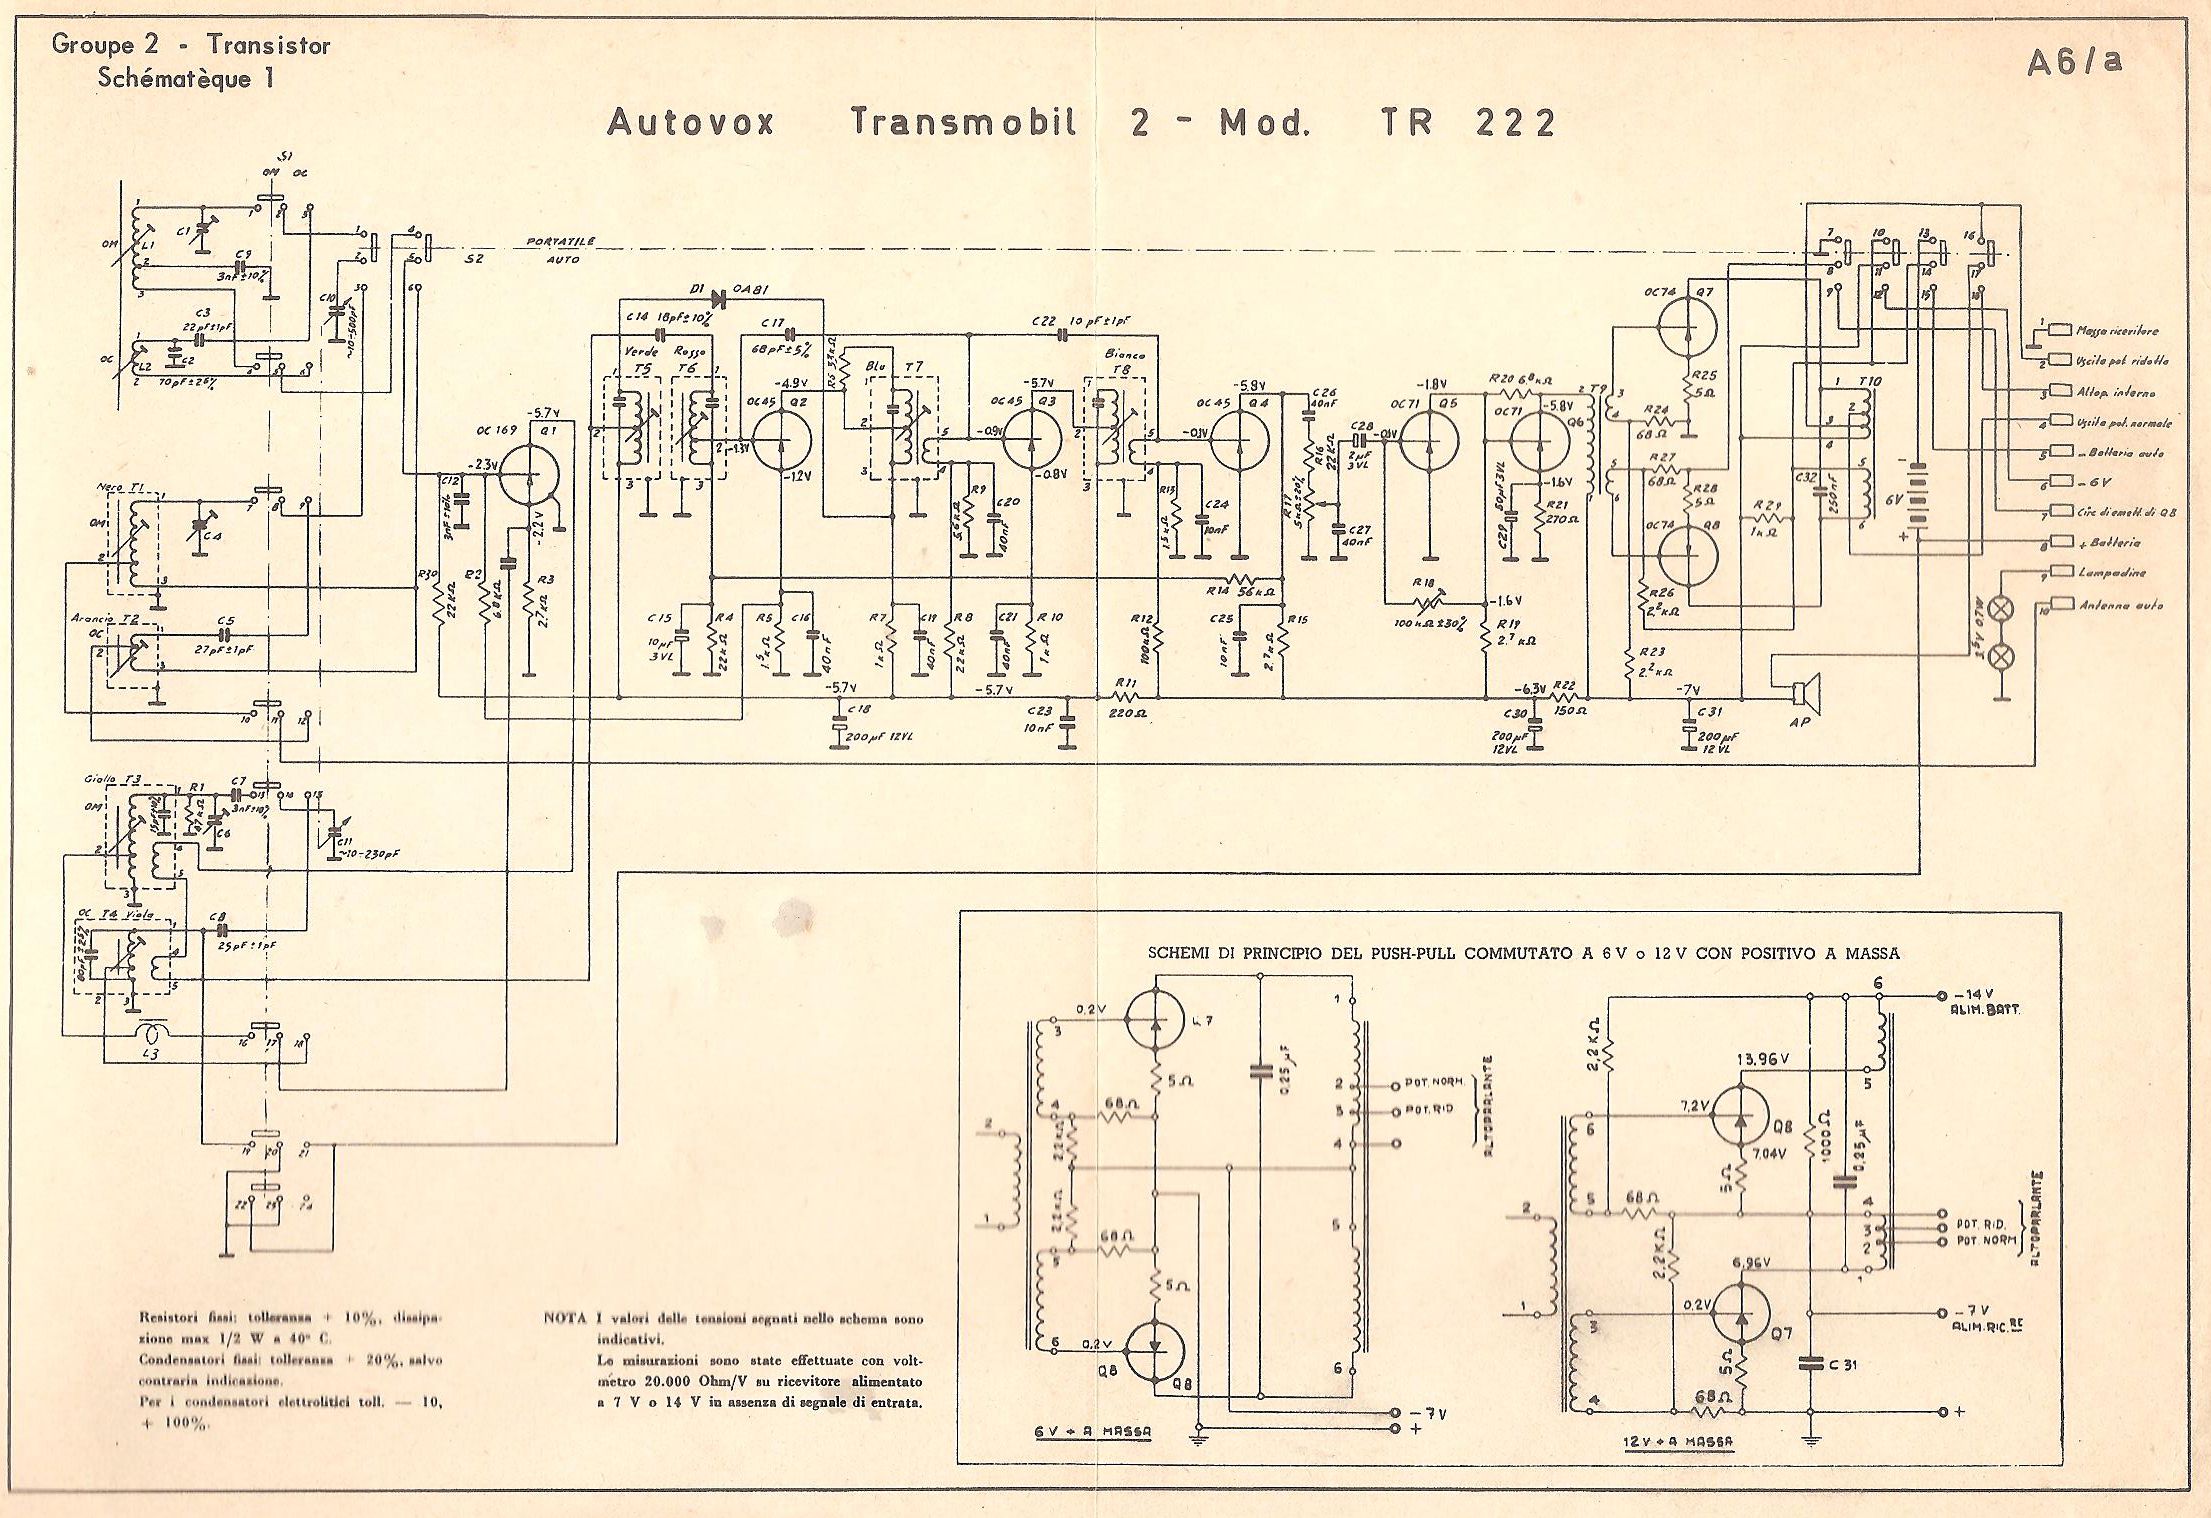 Autovox Transmobil 2 mod. TR 222 - 1